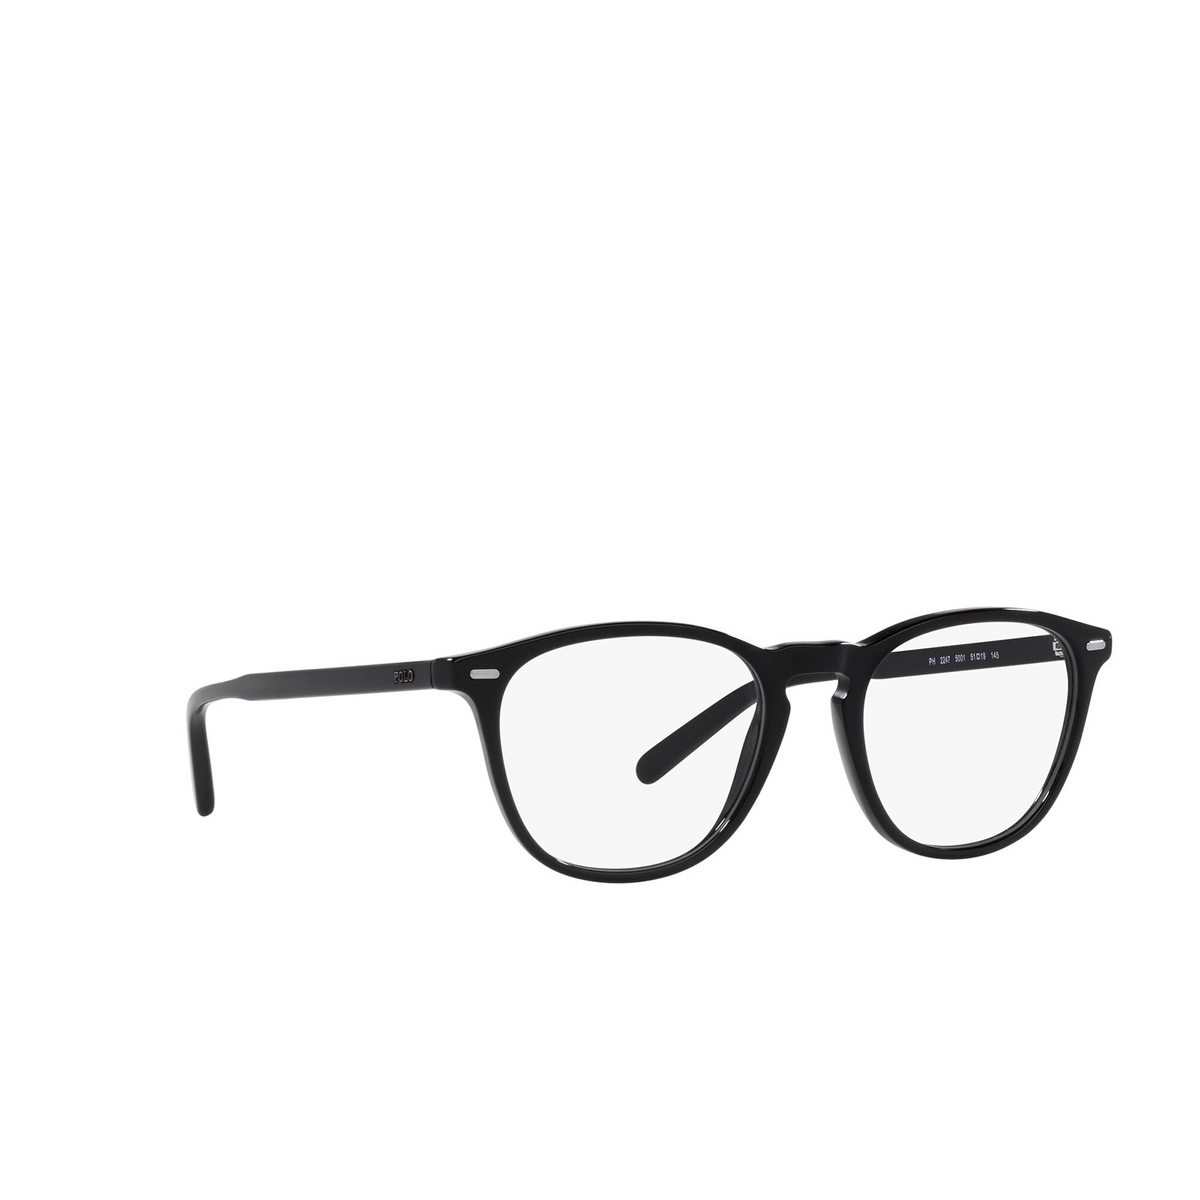 Polo Ralph Lauren® Square Eyeglasses: PH2247 color Shiny Black 5001 - three-quarters view.